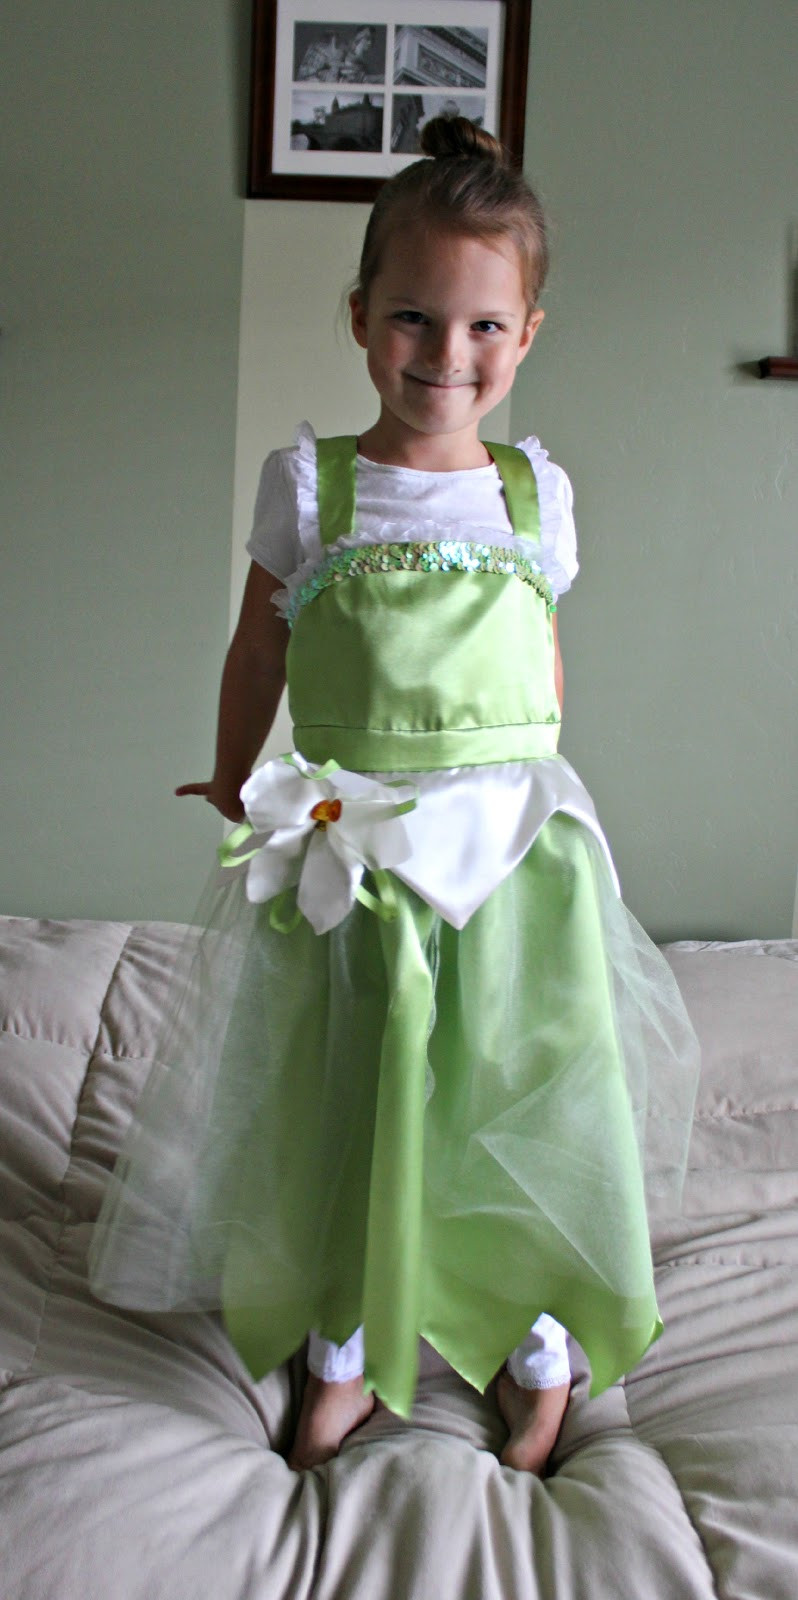 Best ideas about Princess Tiana Costume DIY
. Save or Pin RisC Handmade Homemade Princess Tiana Costume Now.